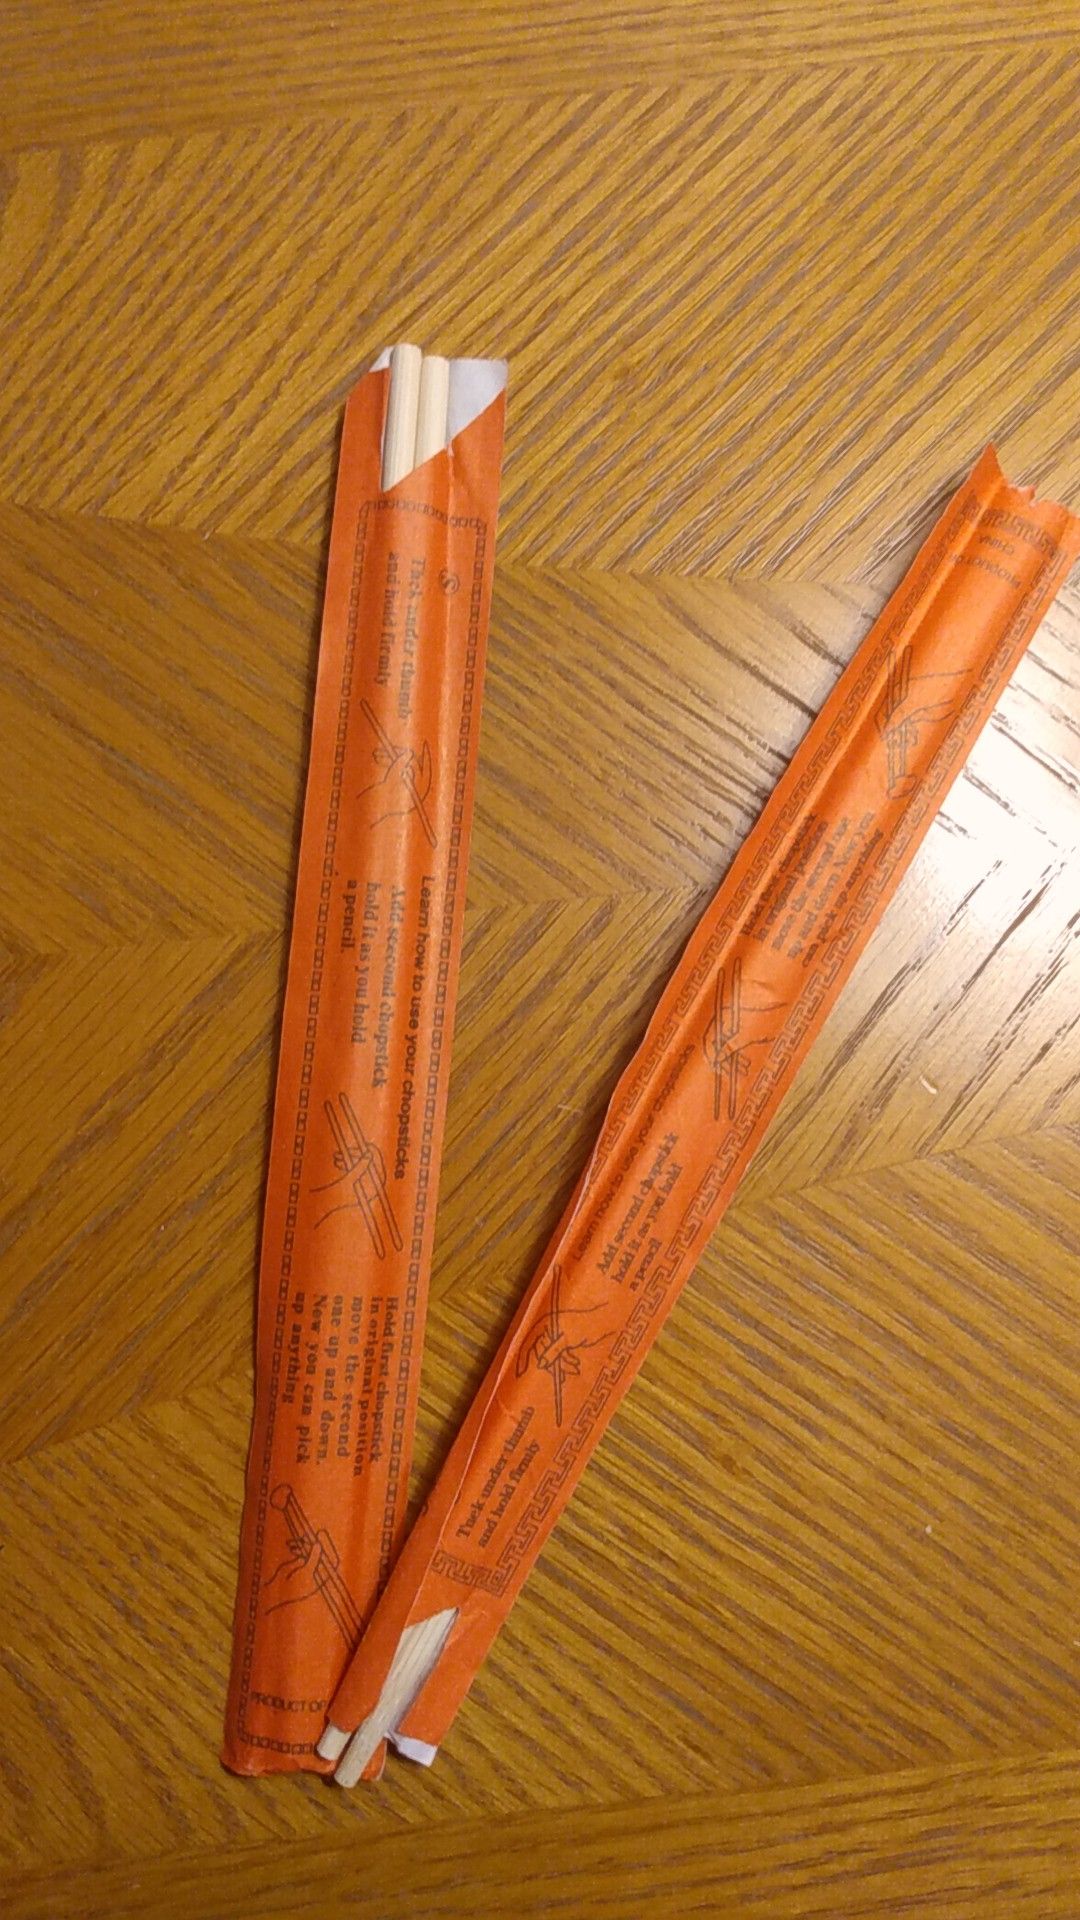 Two sets of chopsticks